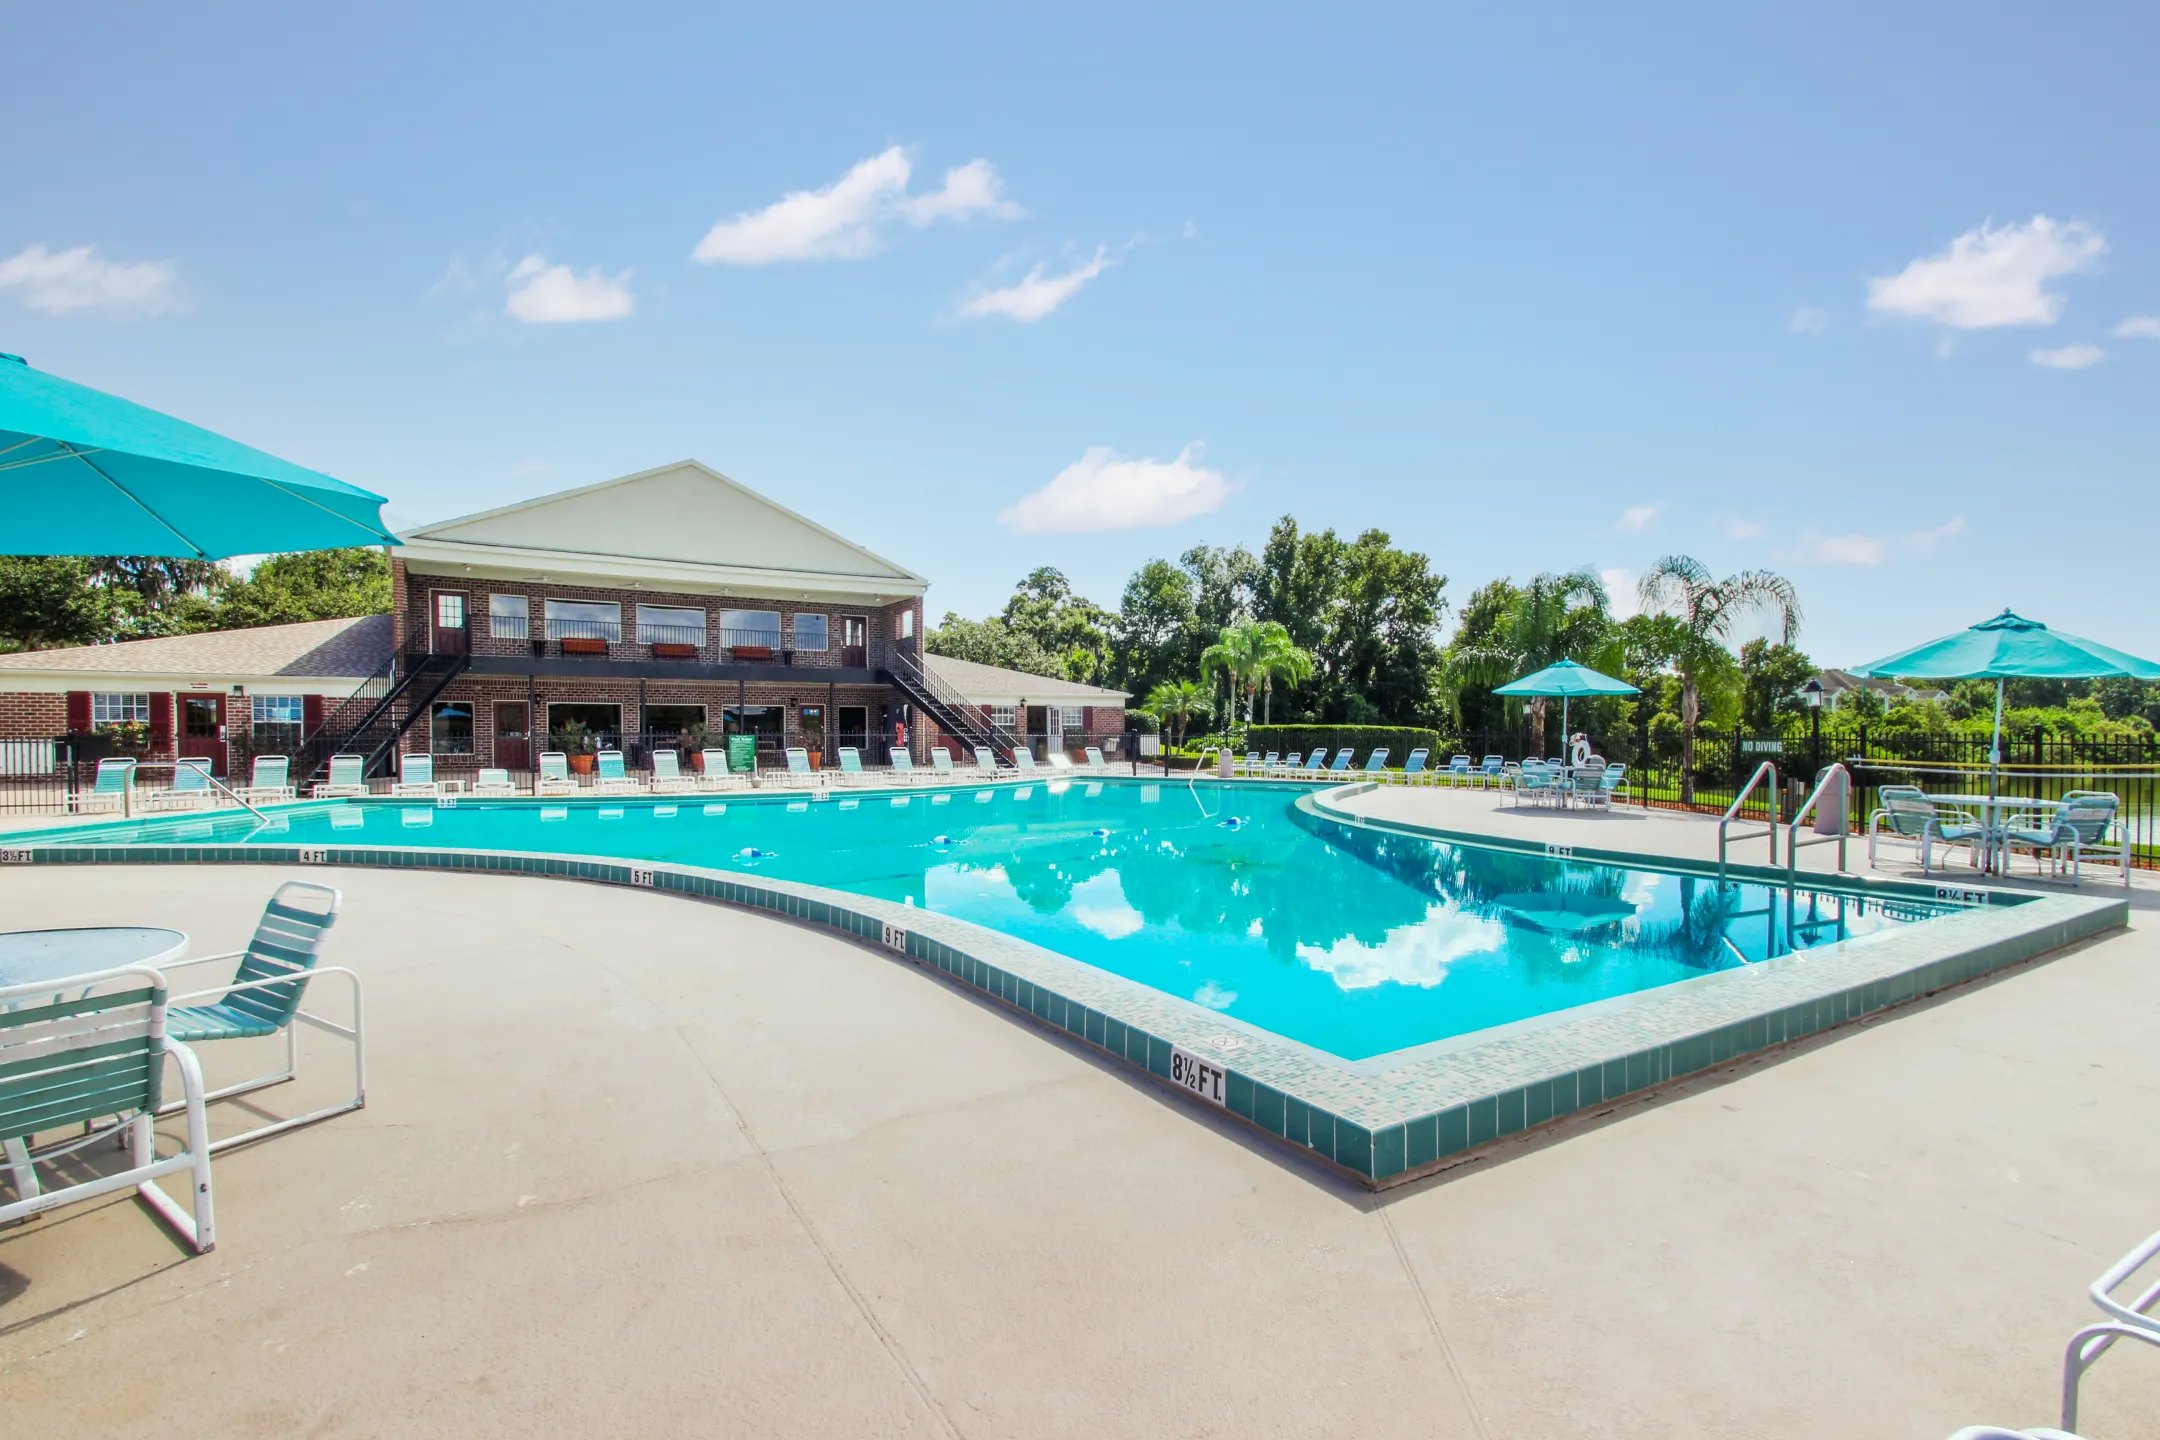 Pool - Carlton Arms Of North Lakeland - Lakeland, FL